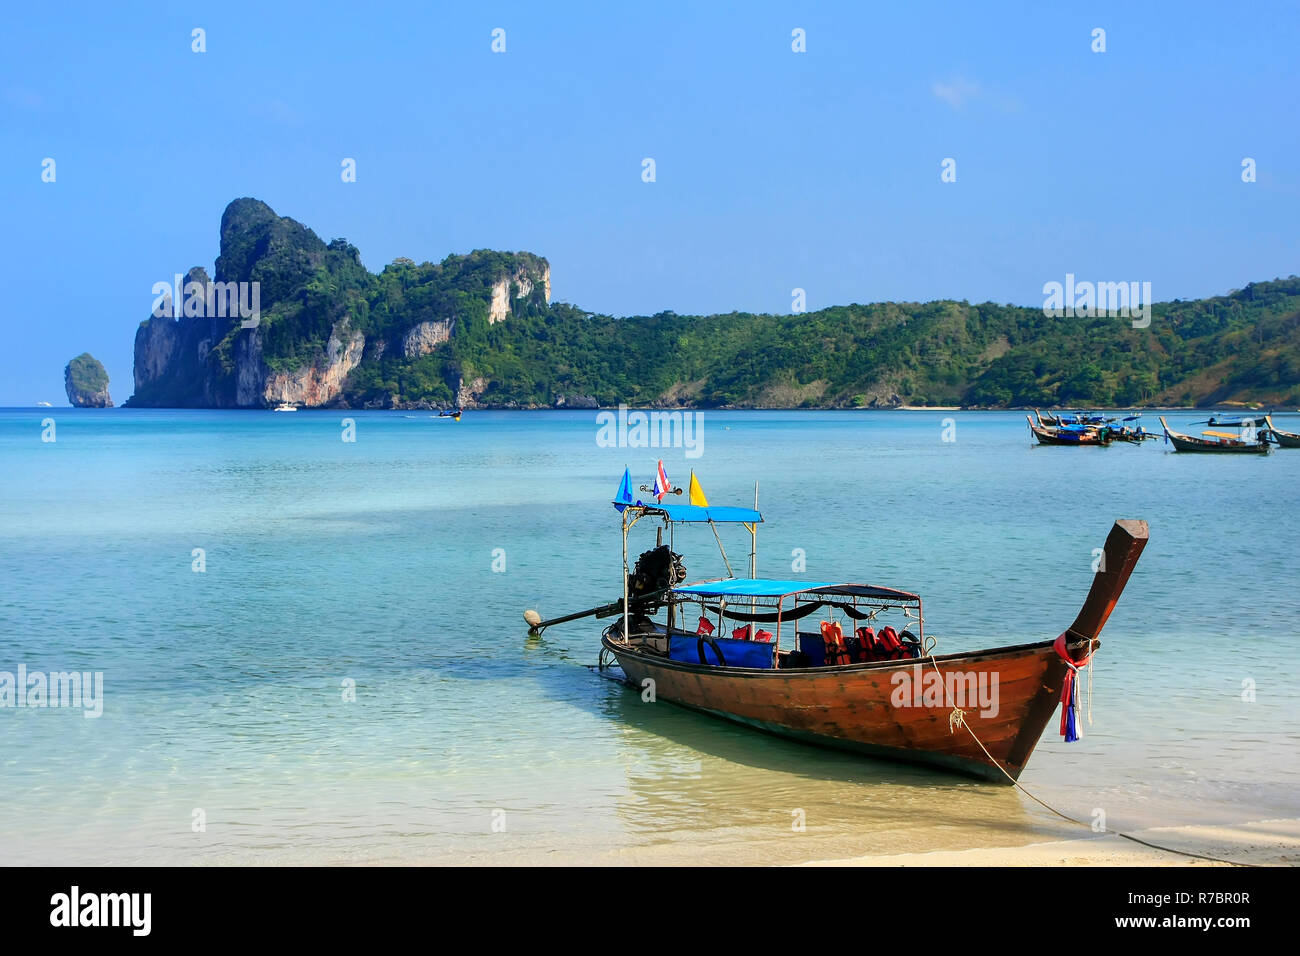 Longtail-Boot verankert am Ao Loh Dalum Strand auf Phi Phi Don Island, Provinz Krabi, Thailand. Koh Phi Phi Don ist Teil eines marine National Park. Stockfoto